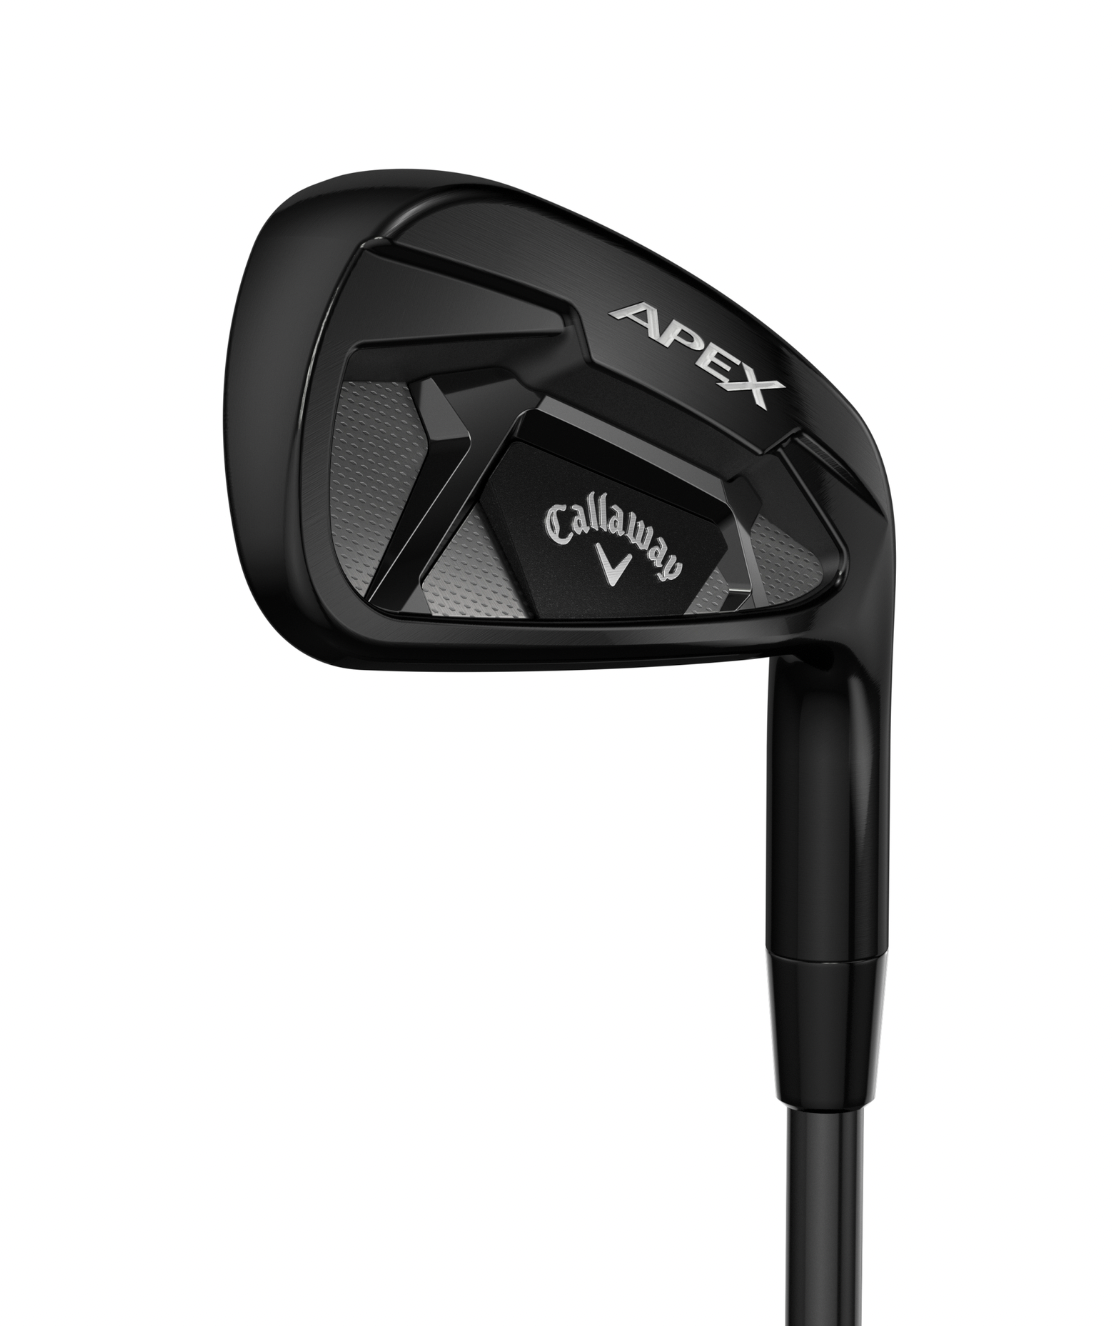 Callaway unveils new Apex irons in Black Plasma PVD finish – GolfWRX